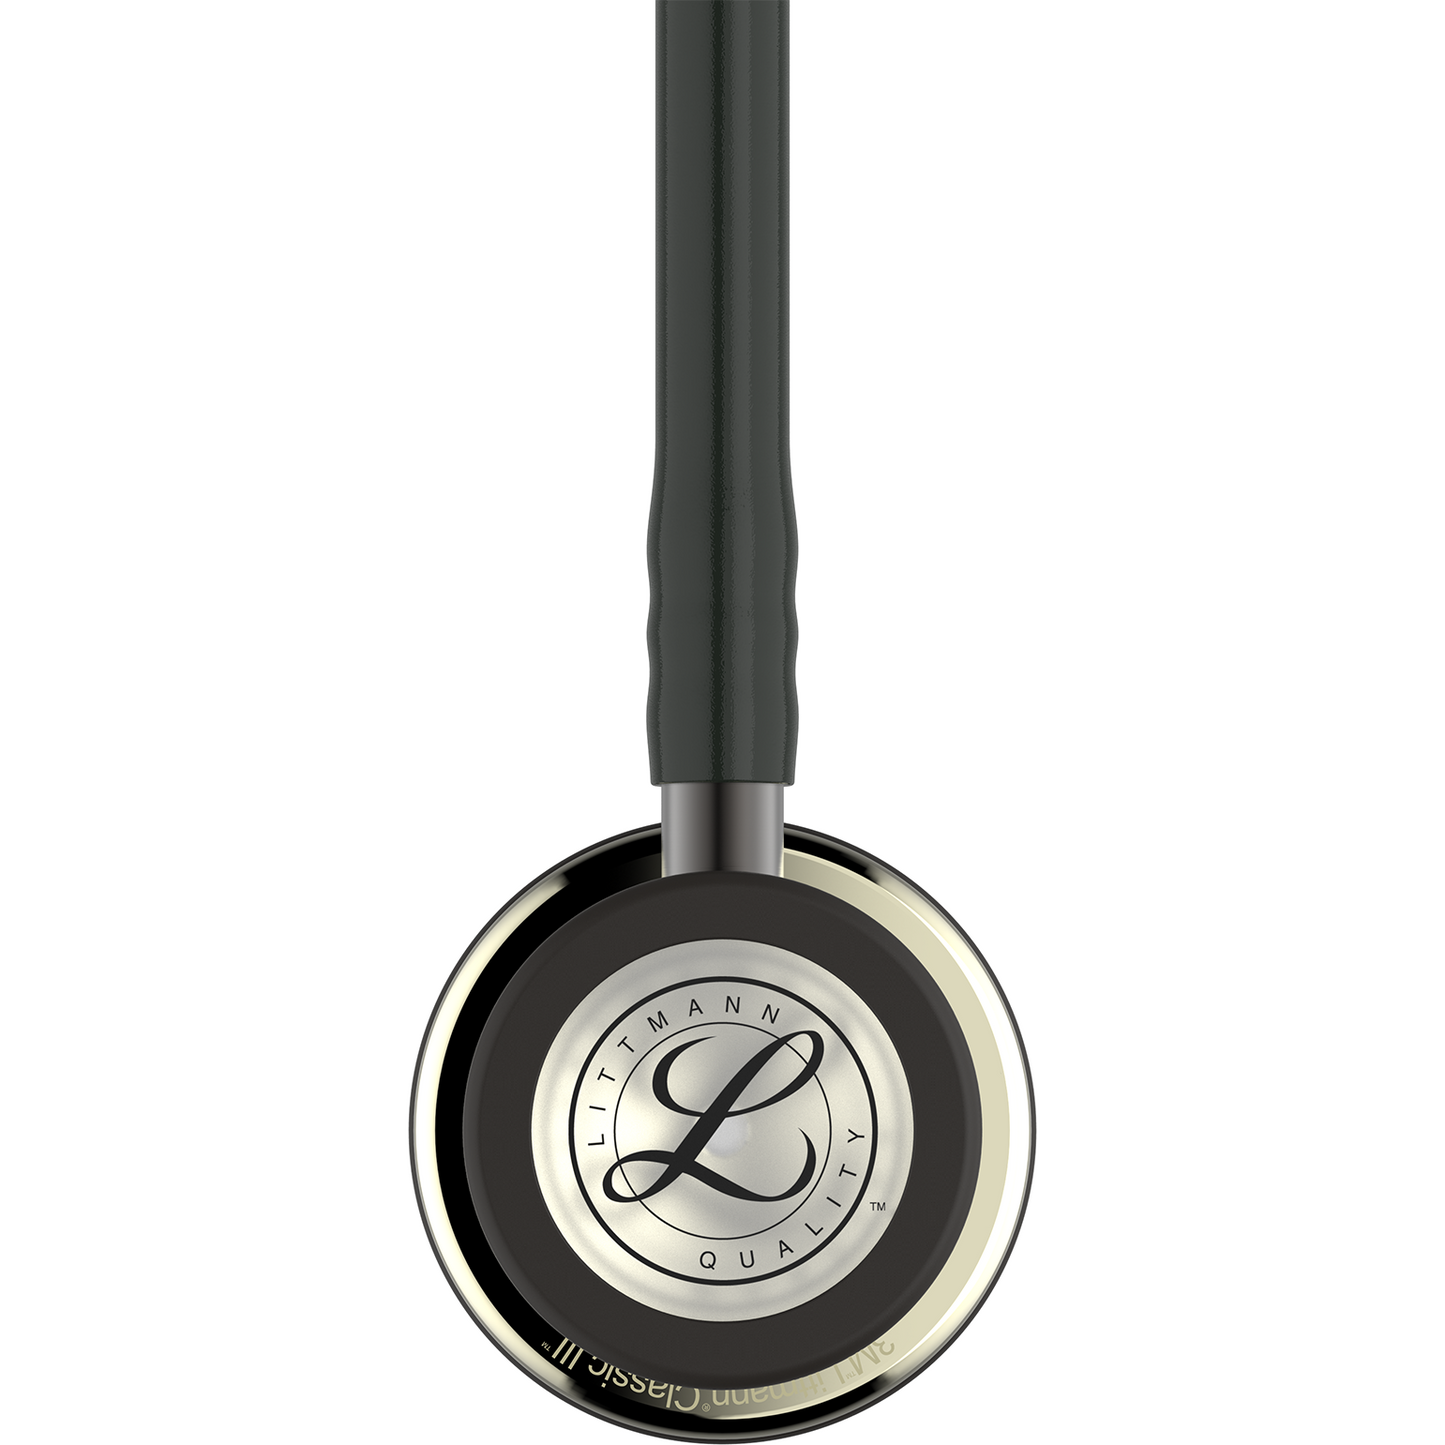 Littmann Classic III Stethoscope: Champagne & Black 5861 3M Littmann